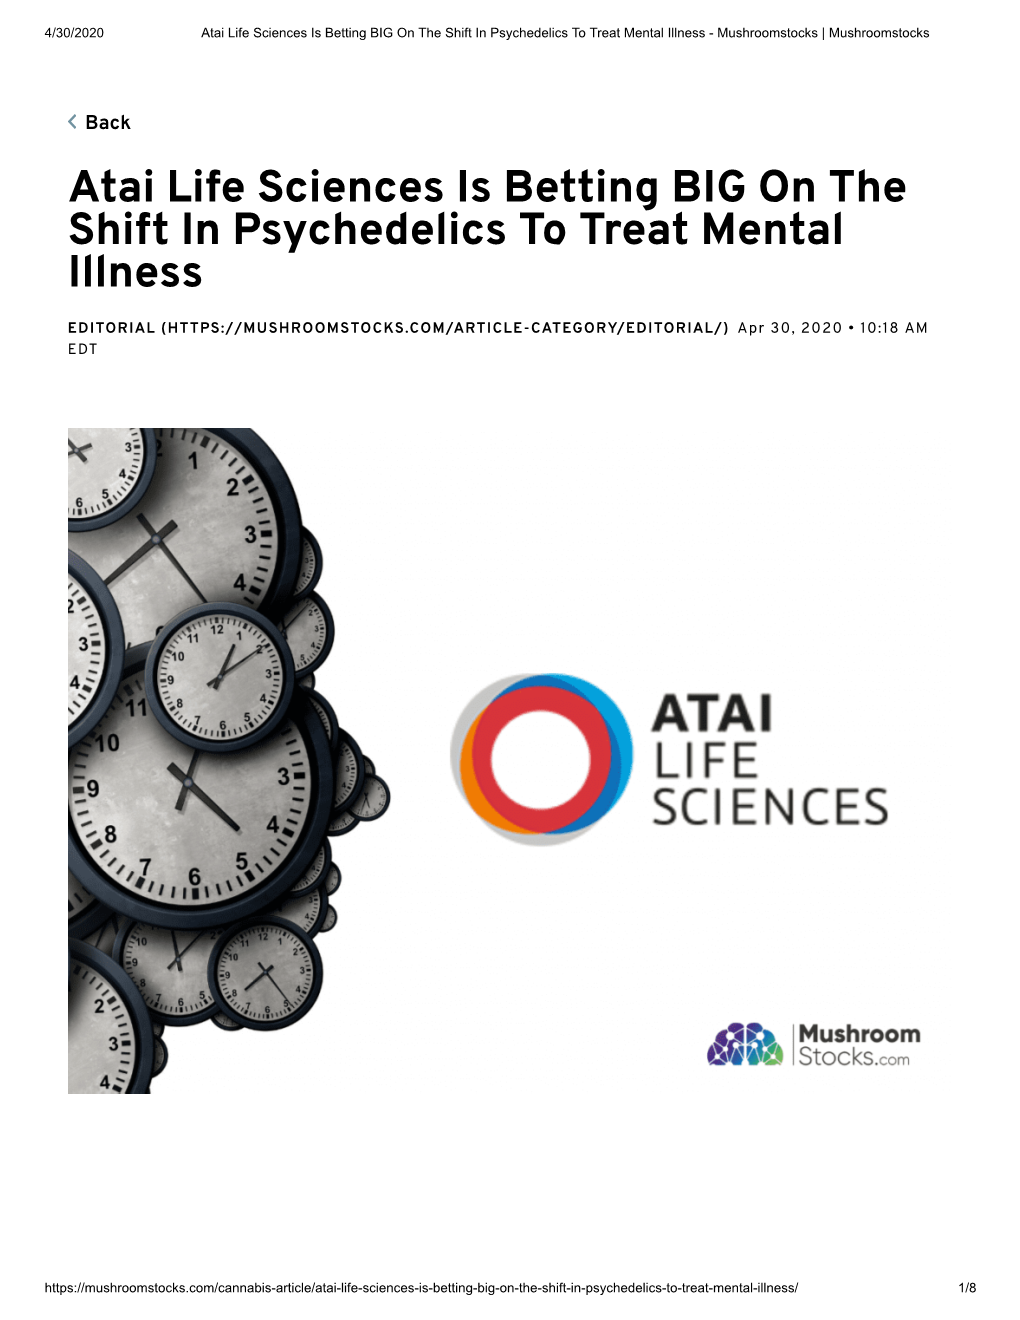 Atai Life Sciences Is Betting BIG on the Shift in Psychedelics to Treat Mental Illness - Mushroomstocks | Mushroomstocks